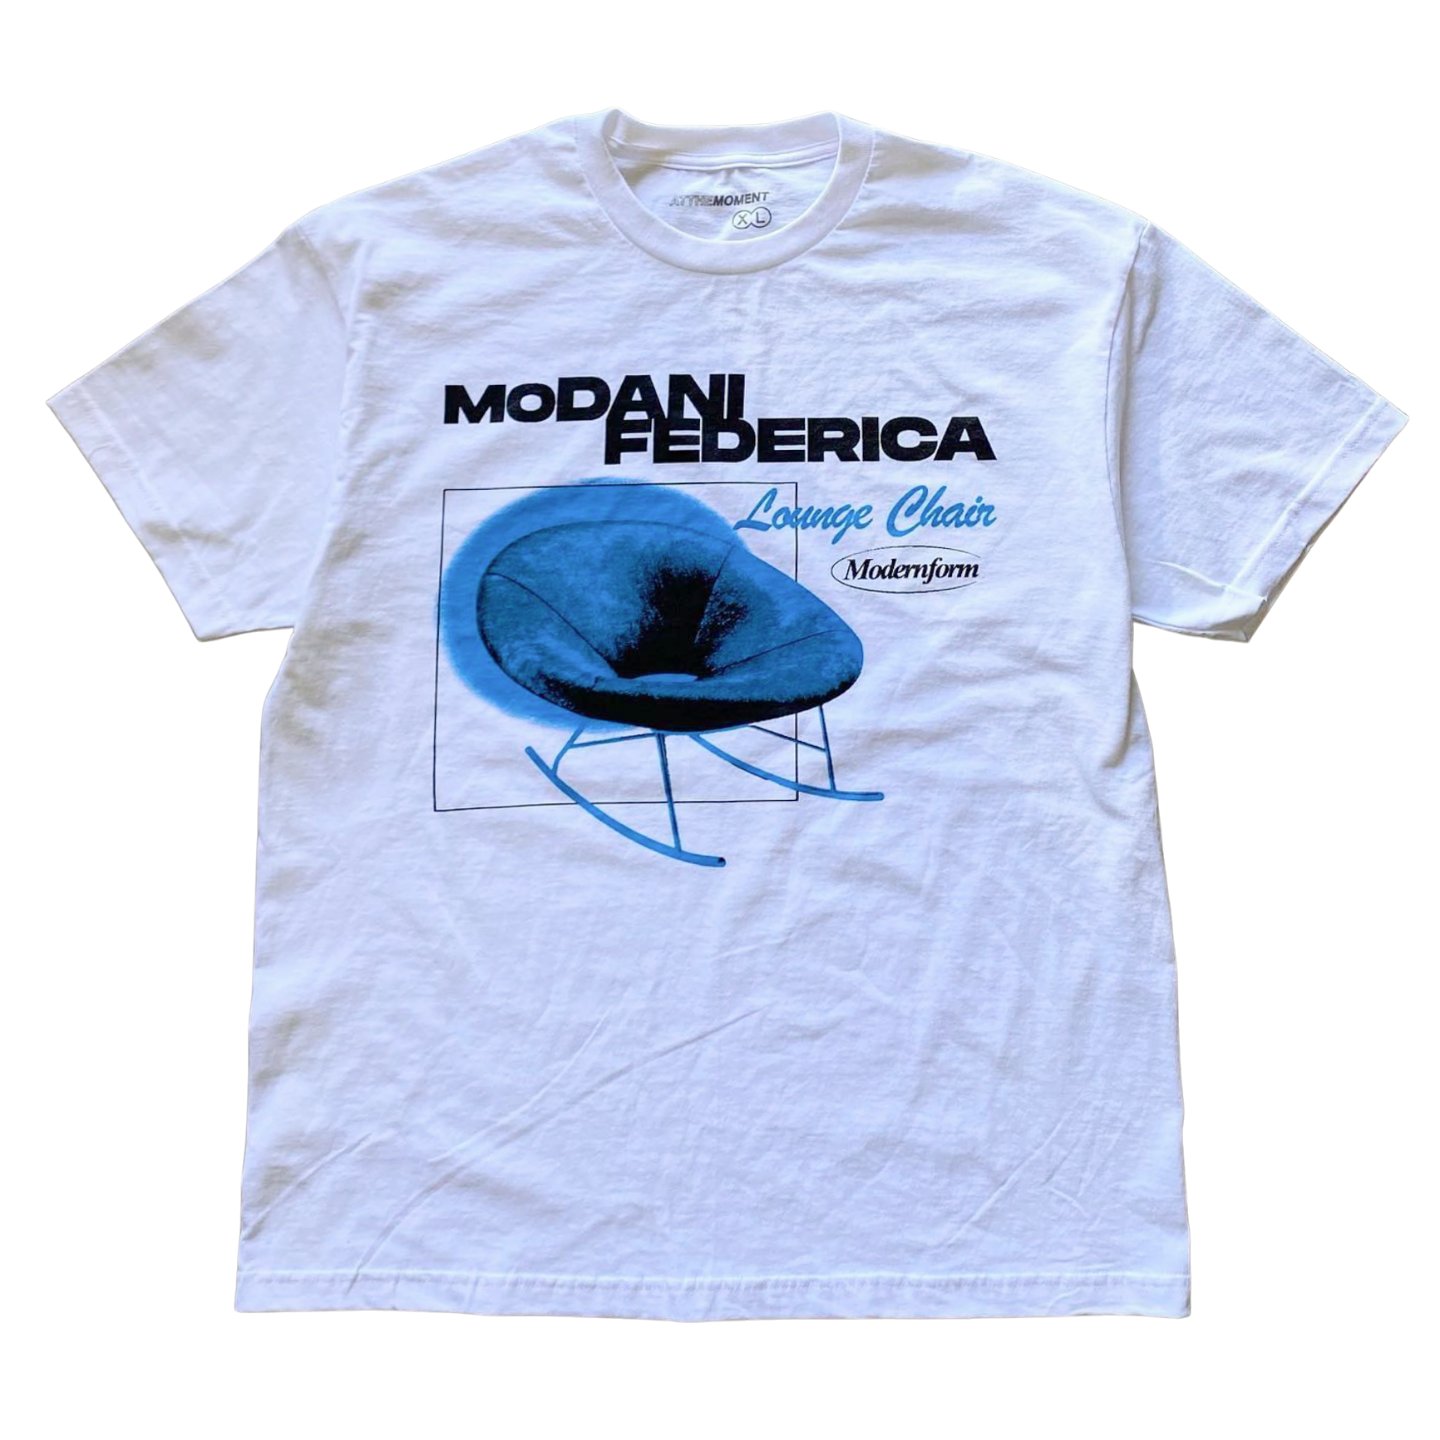 Modani Federica T-Shirt